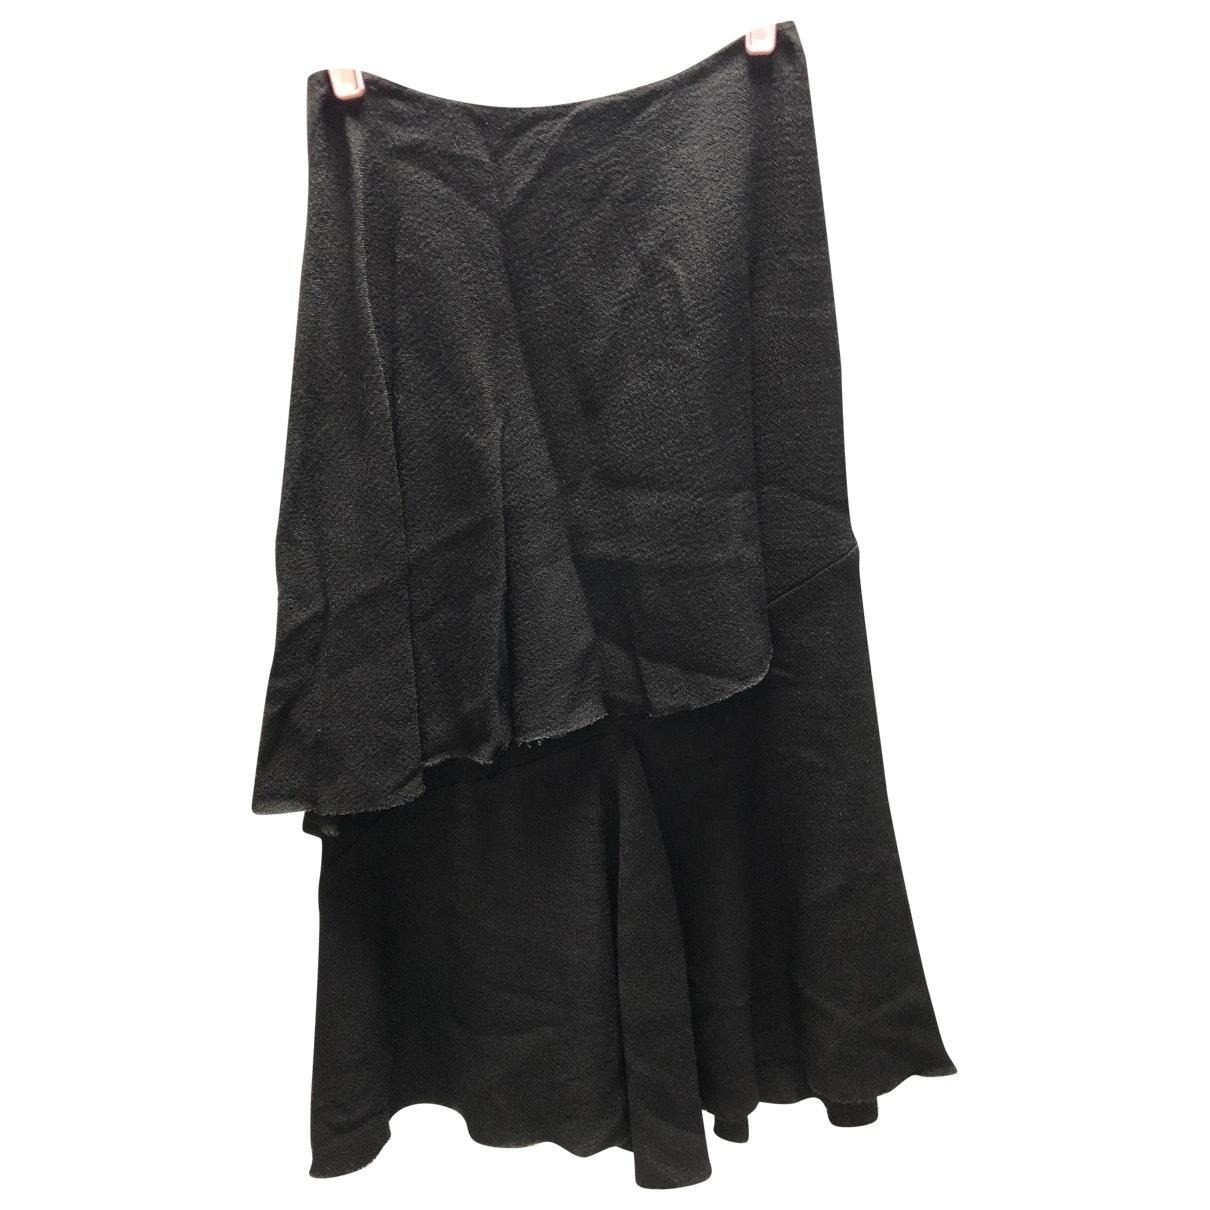 Marni Wool Mid-length Skirt in Black - Lyst